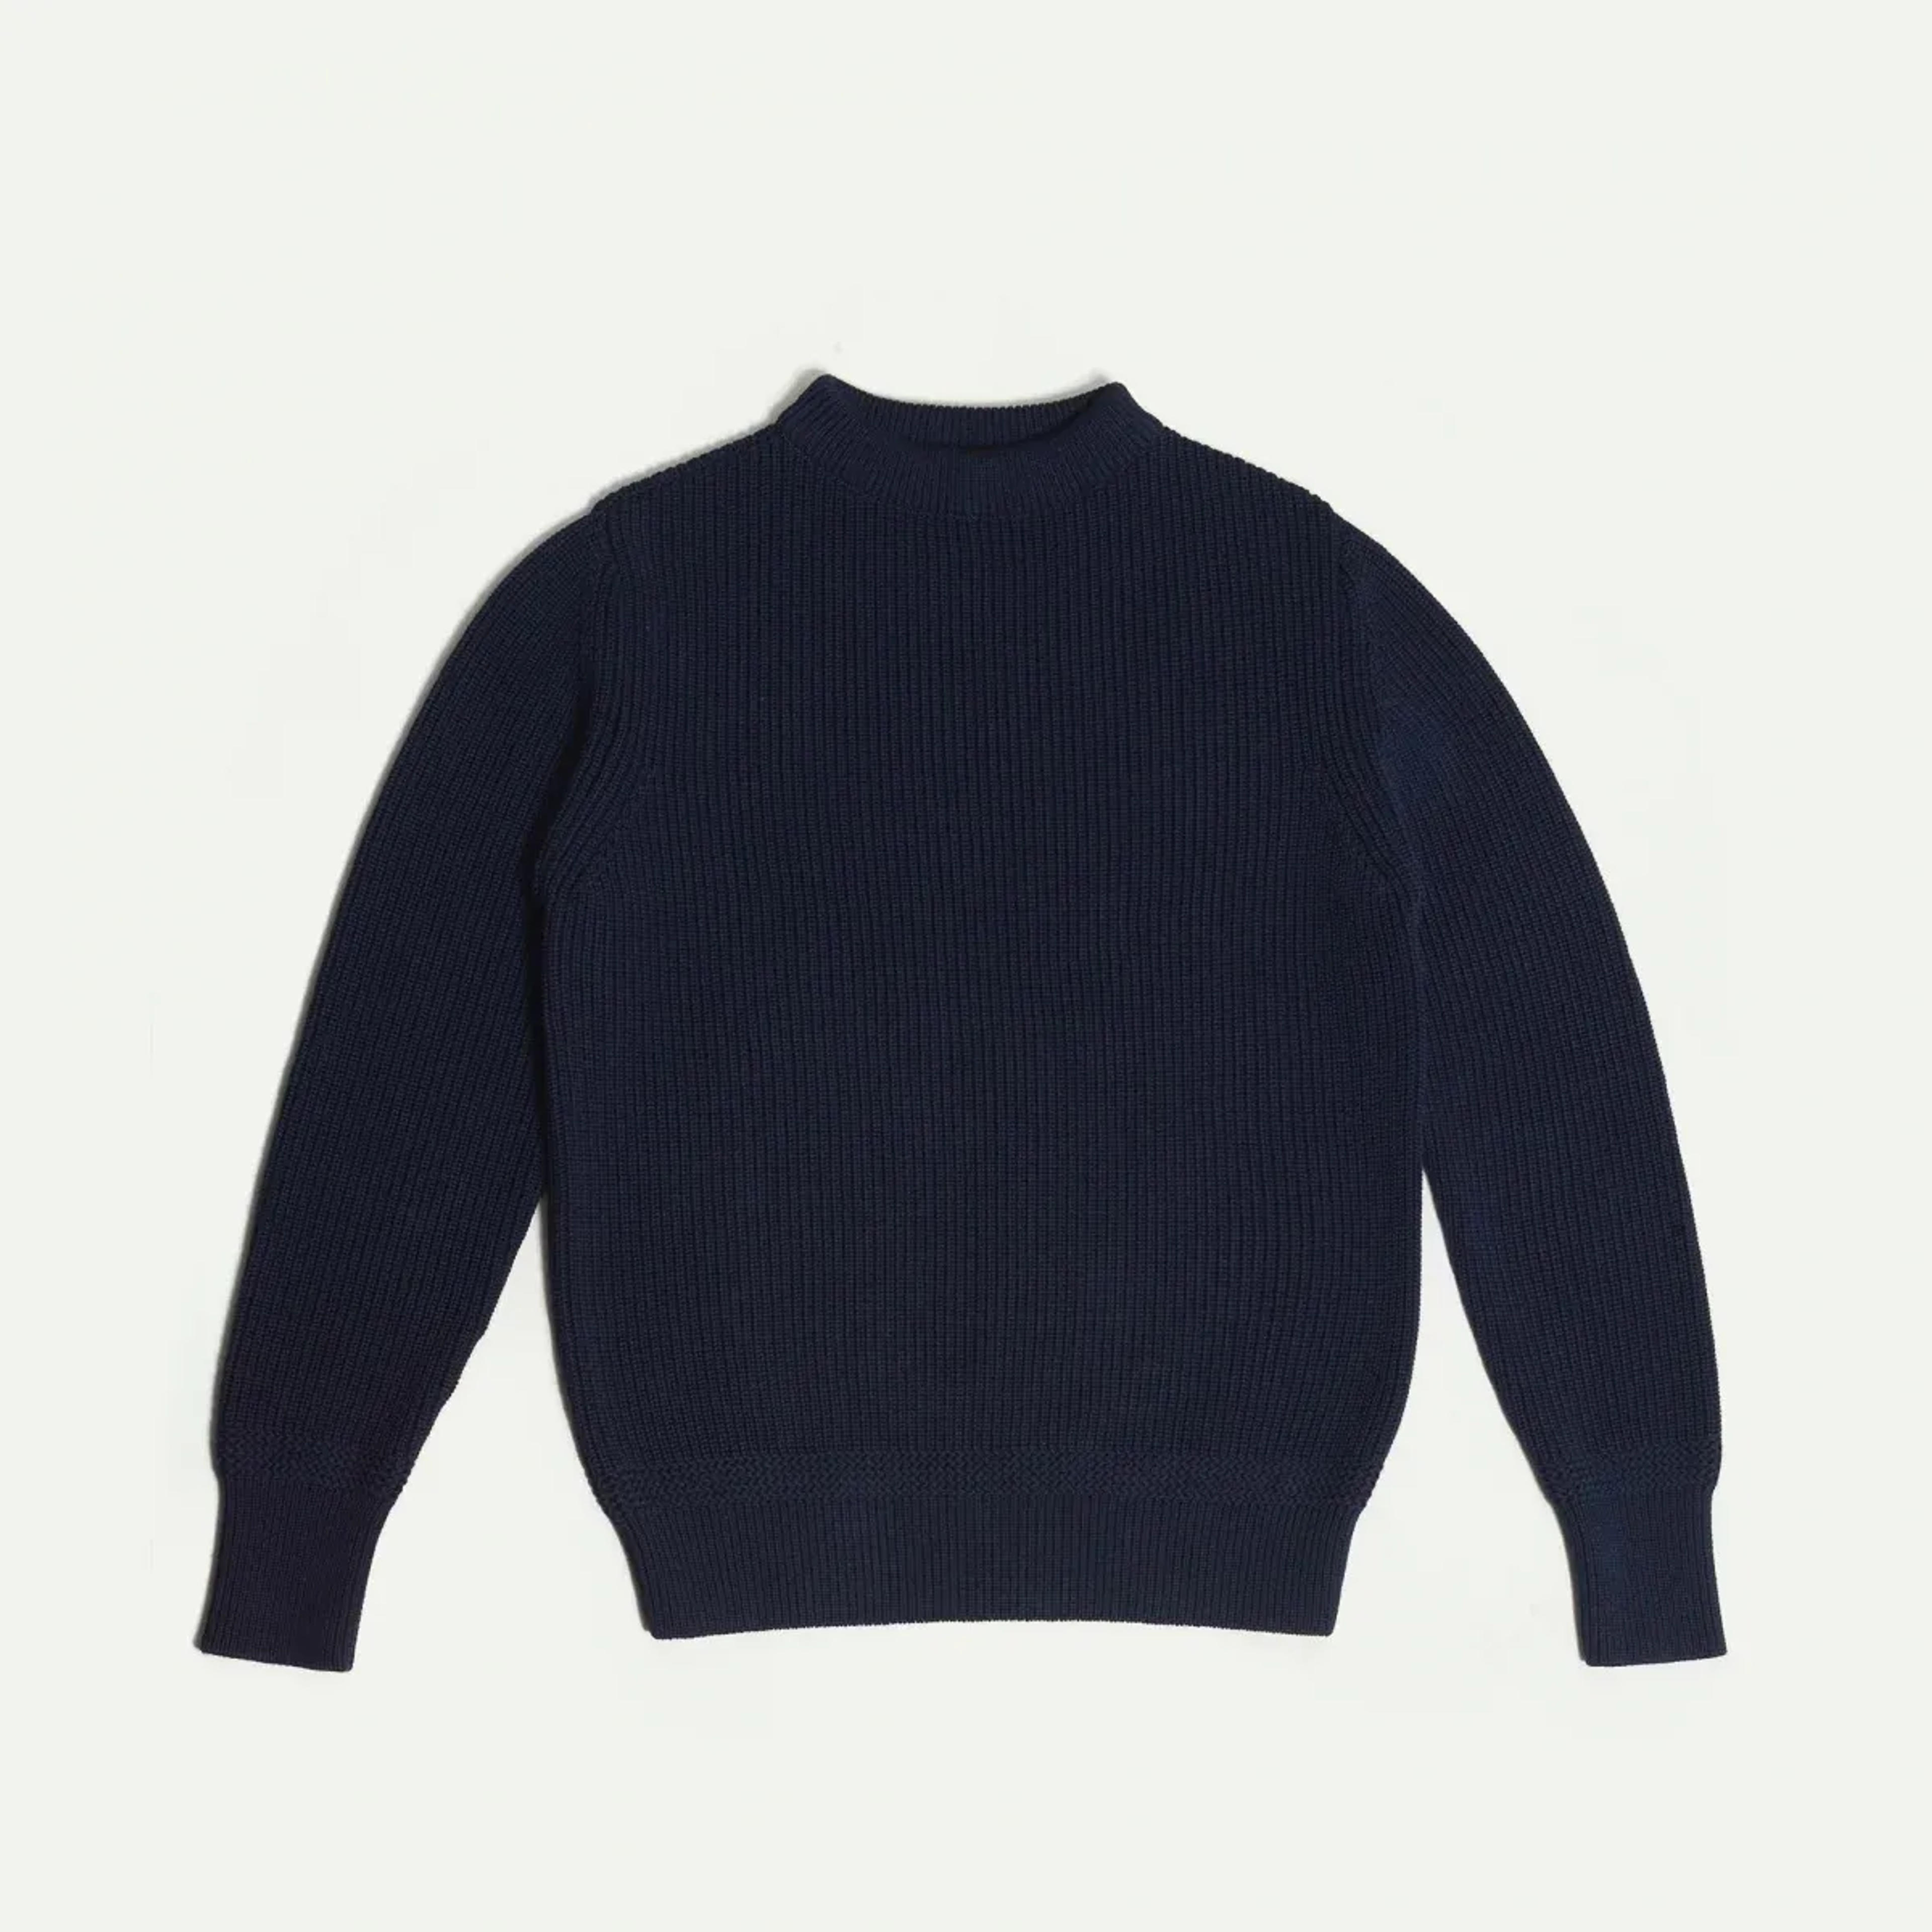 The seaman’s sweater made in France by Bleu de Chauffe- Navy Blue